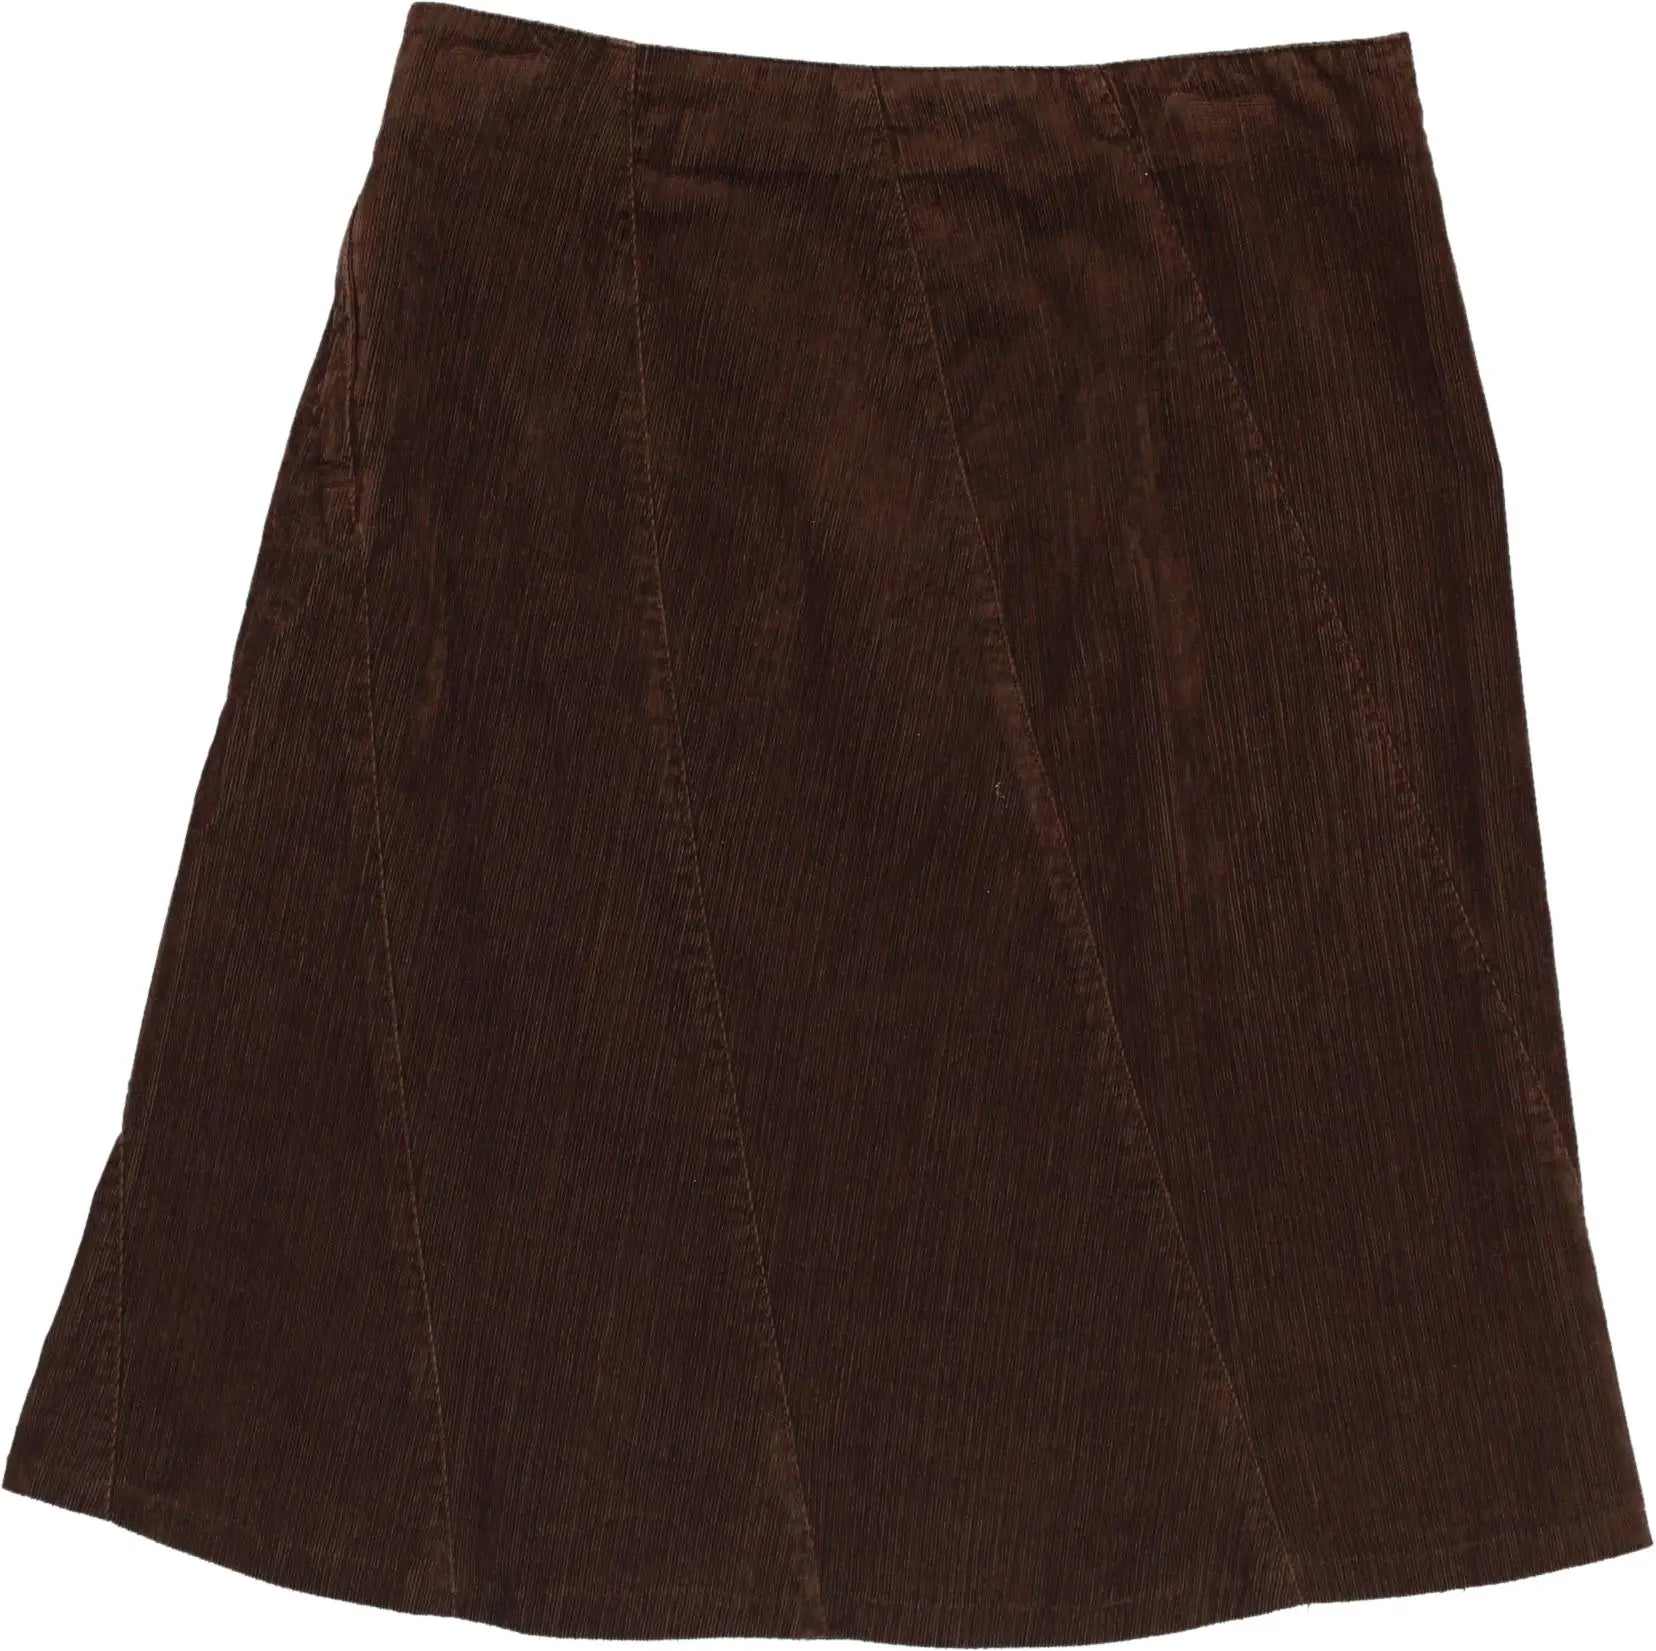 Morrison - Skirt- ThriftTale.com - Vintage and second handclothing